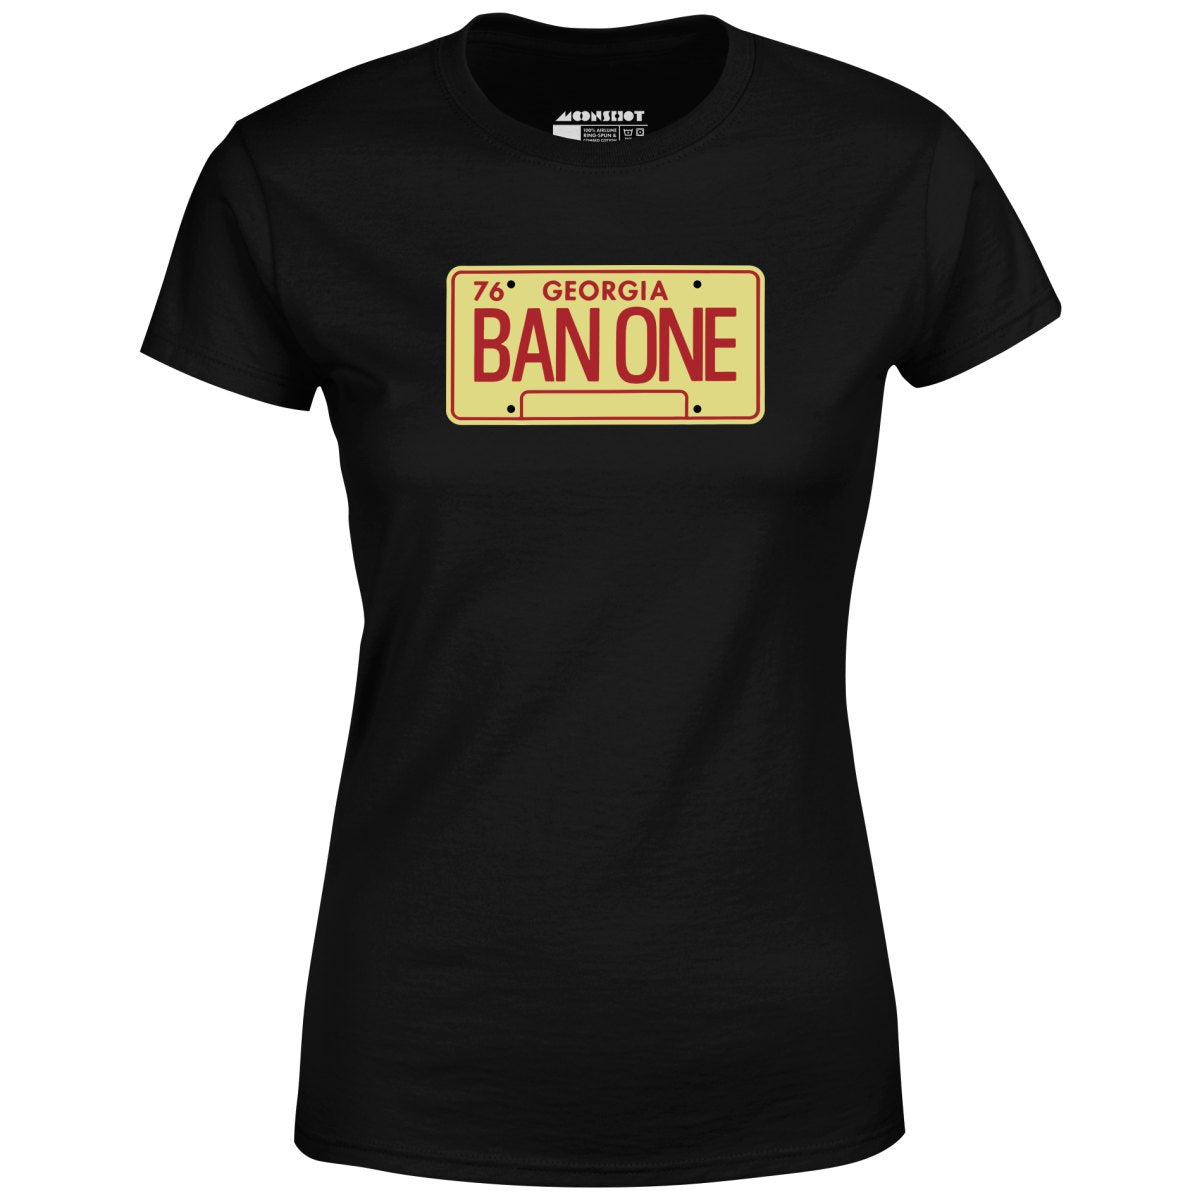 Ban One - Smokey and The Bandit - Women's T-Shirt